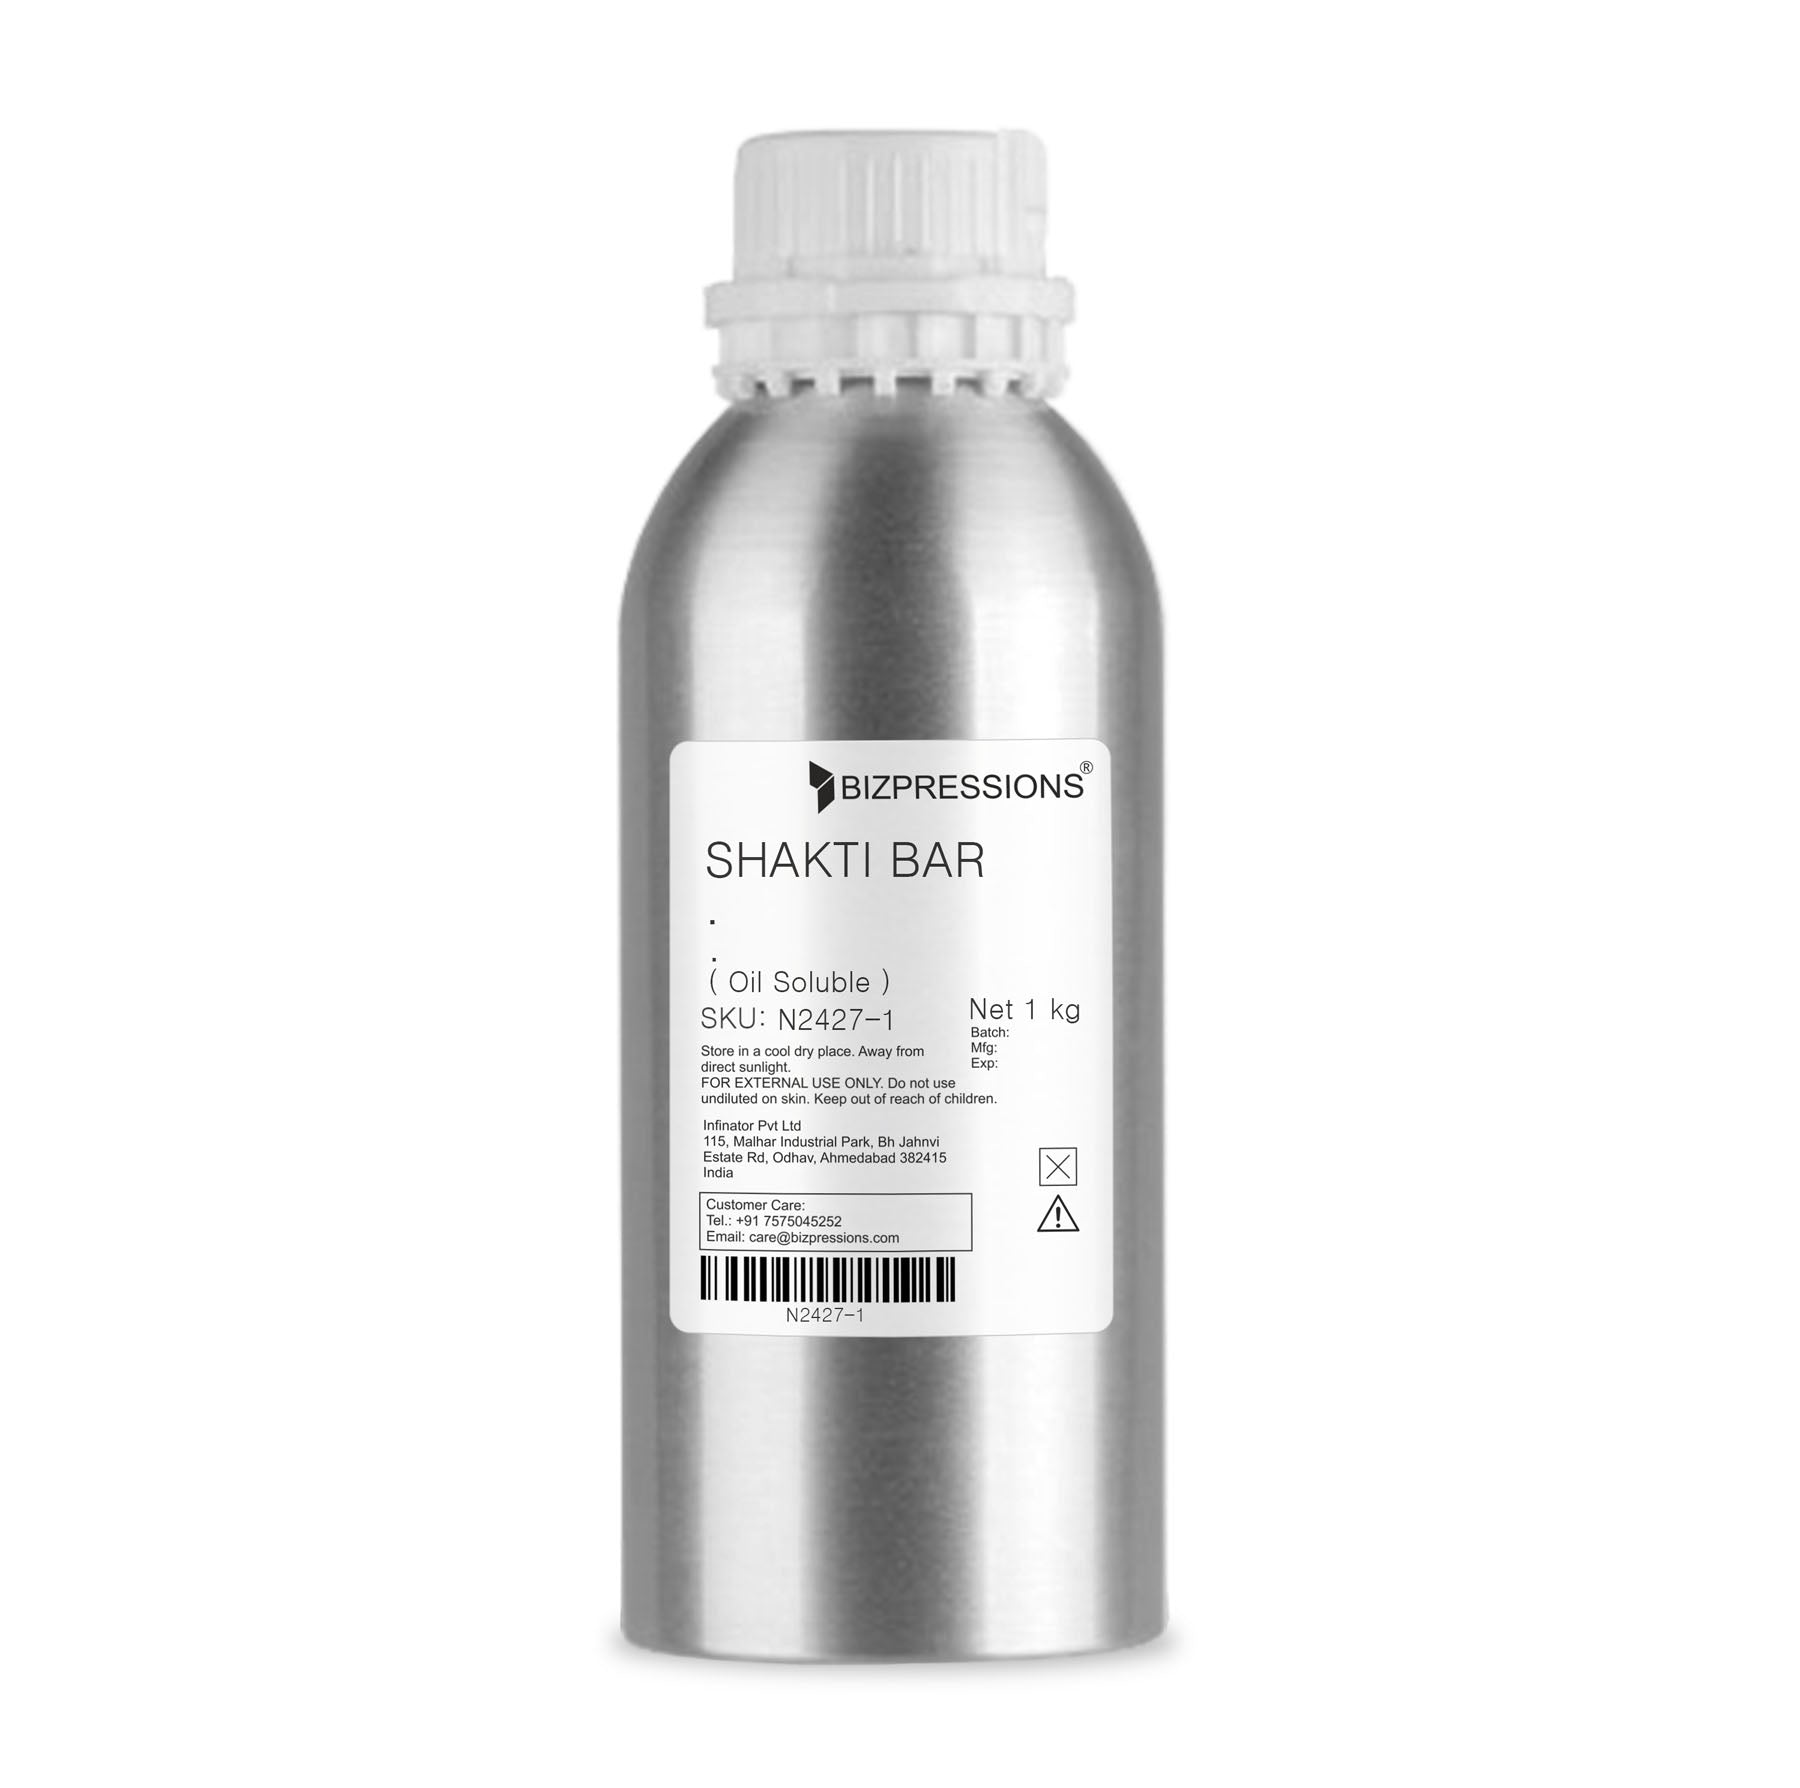 SHAKTI BAR - Fragrance ( Oil Soluble ) - 1 kg